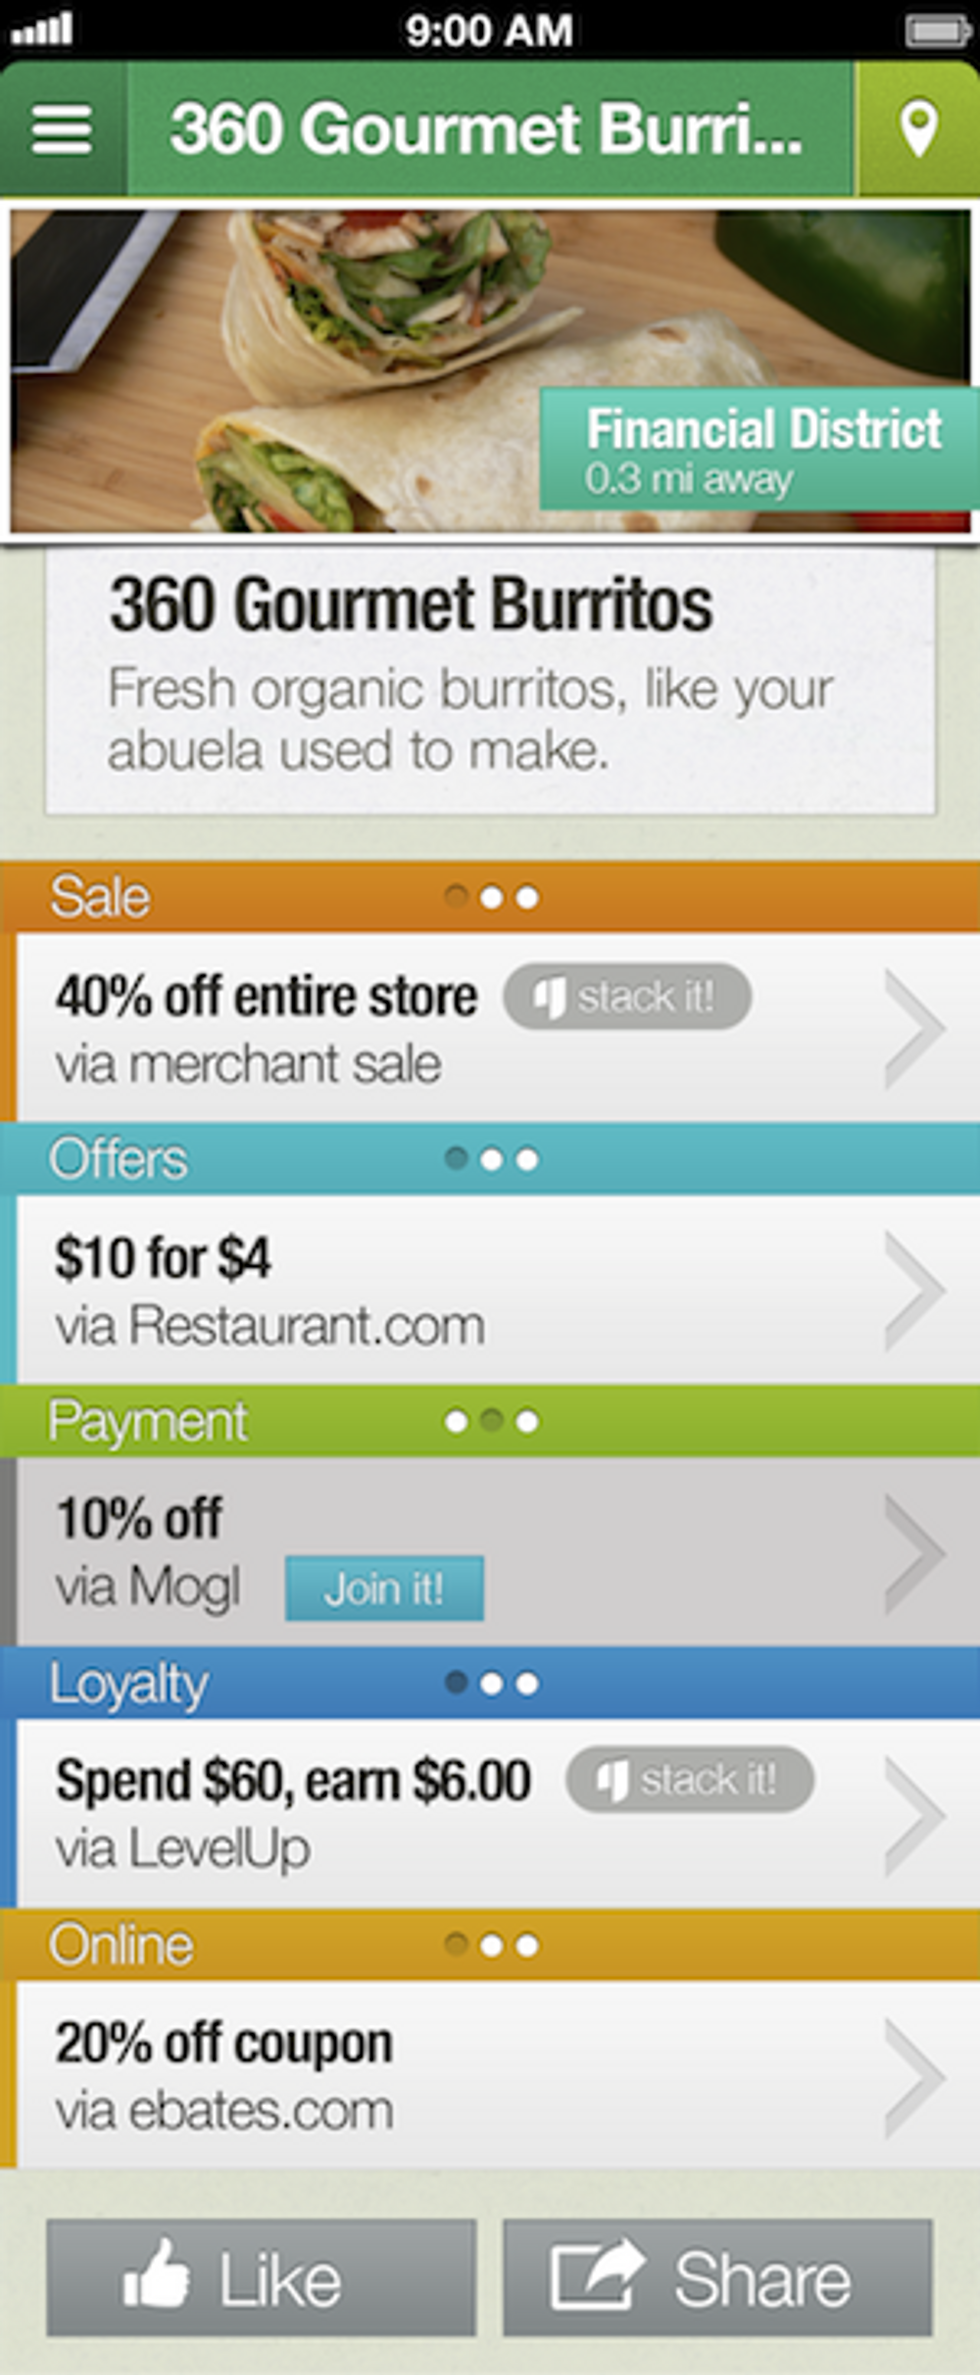 Greenstack iPhone App Helps You Maximize Discounts at Restaurants